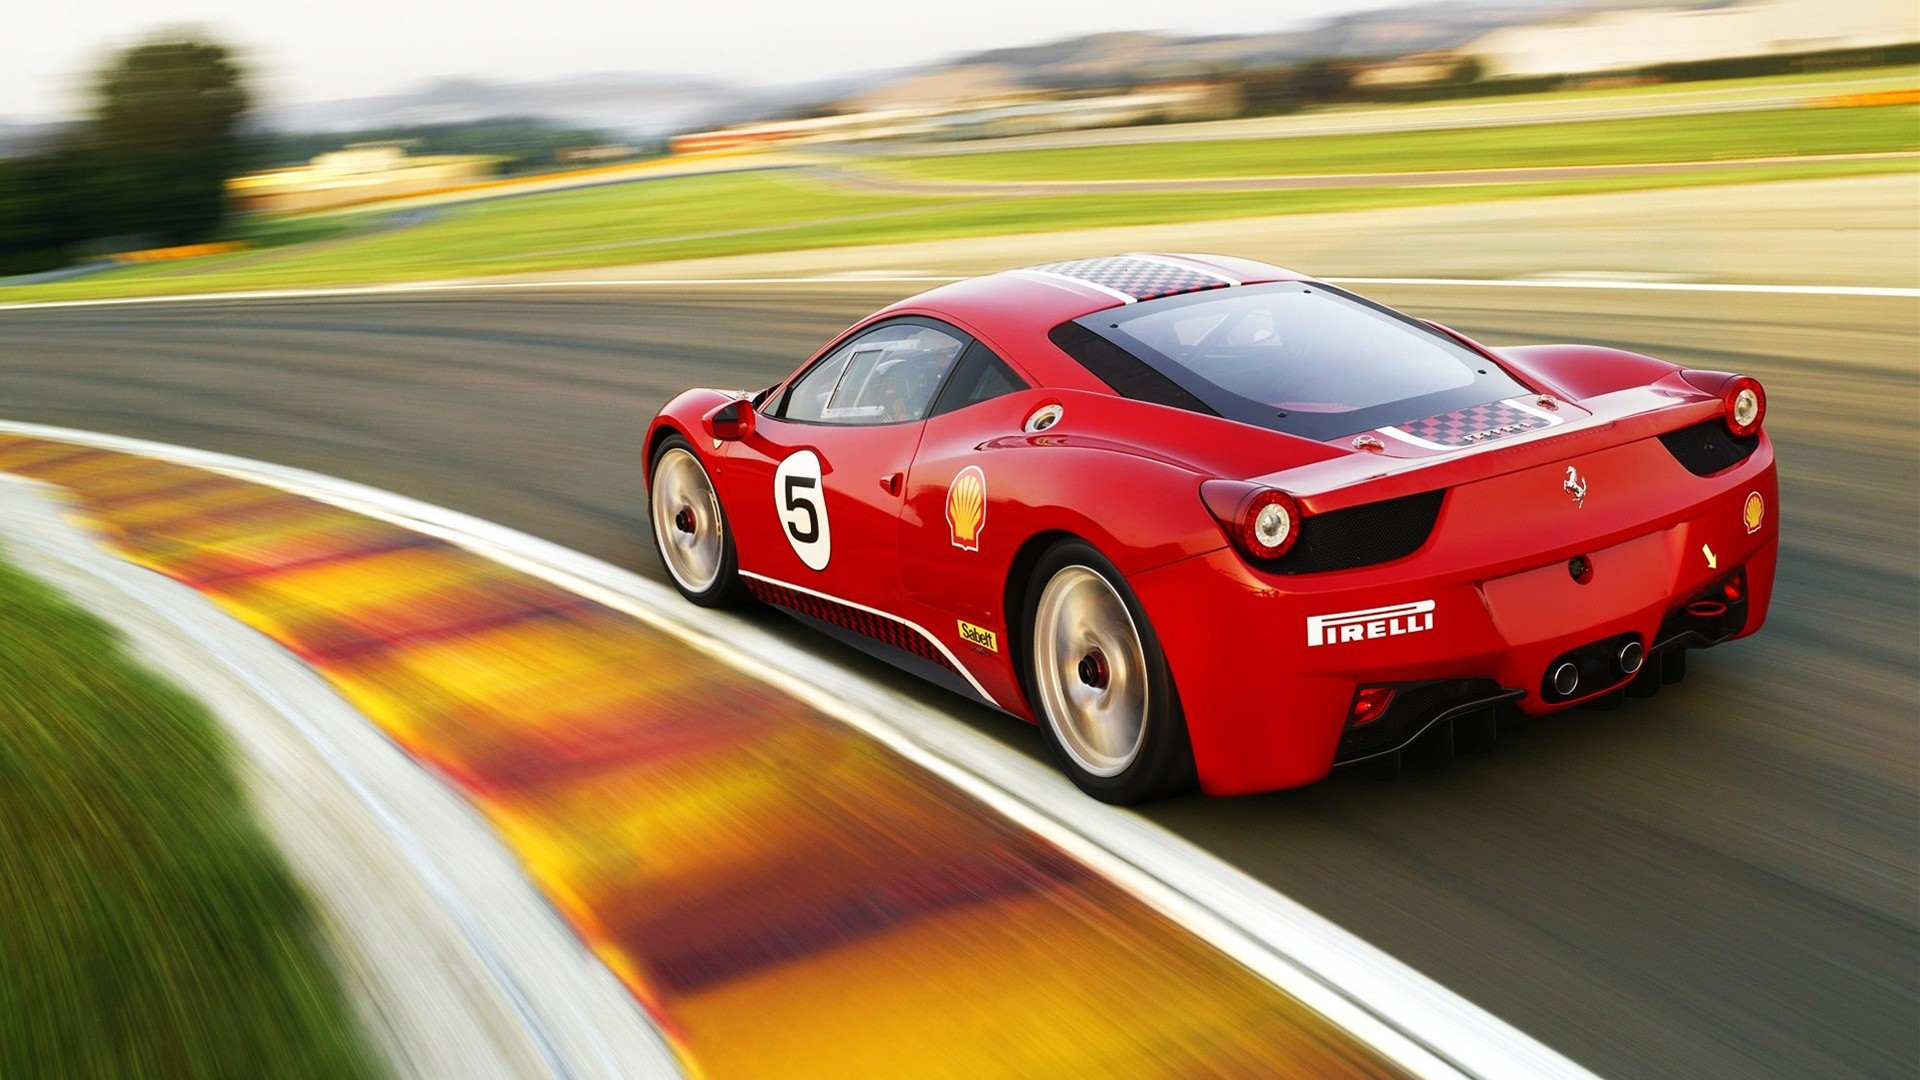 General 1920x1080 car Ferrari Ferrari 458 red cars vehicle race tracks numbers italian cars Stellantis